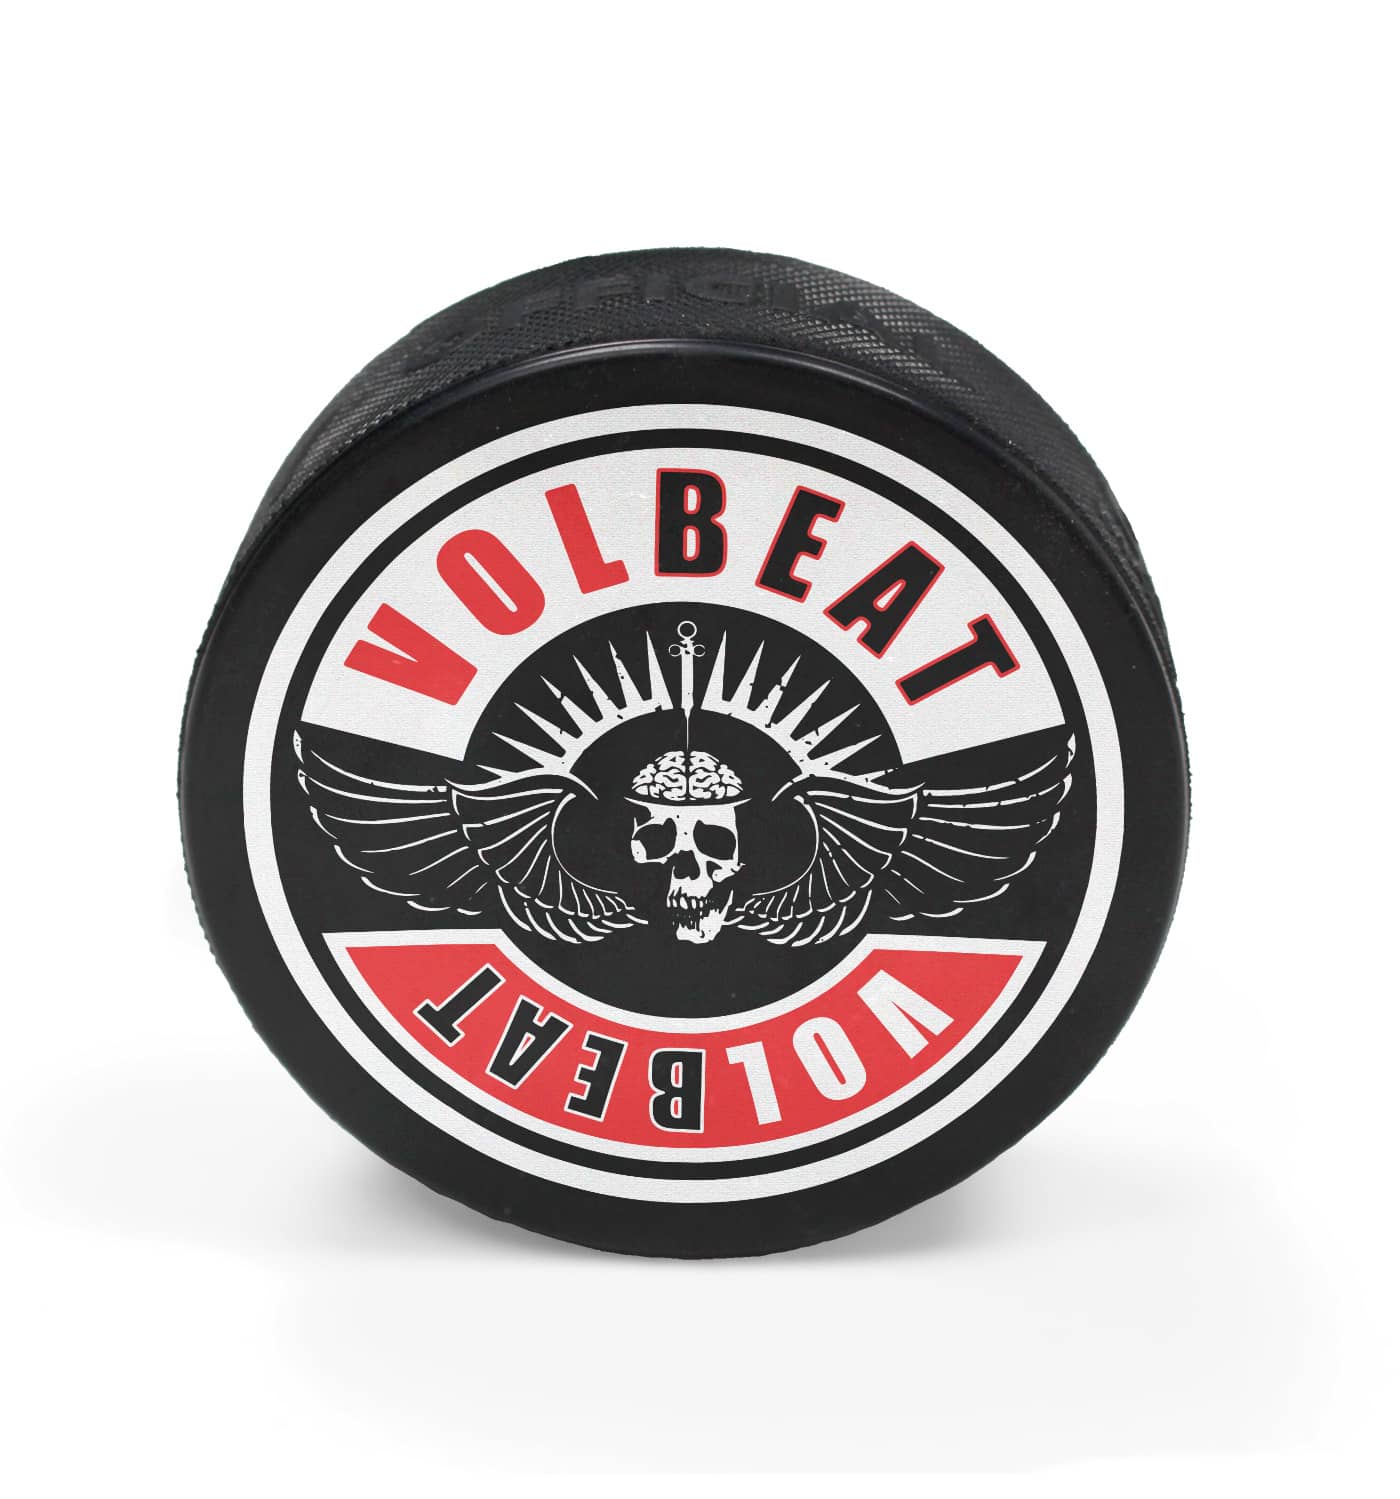 VOLBEAT ‘THE CIRCLE’ limited edition hockey puck